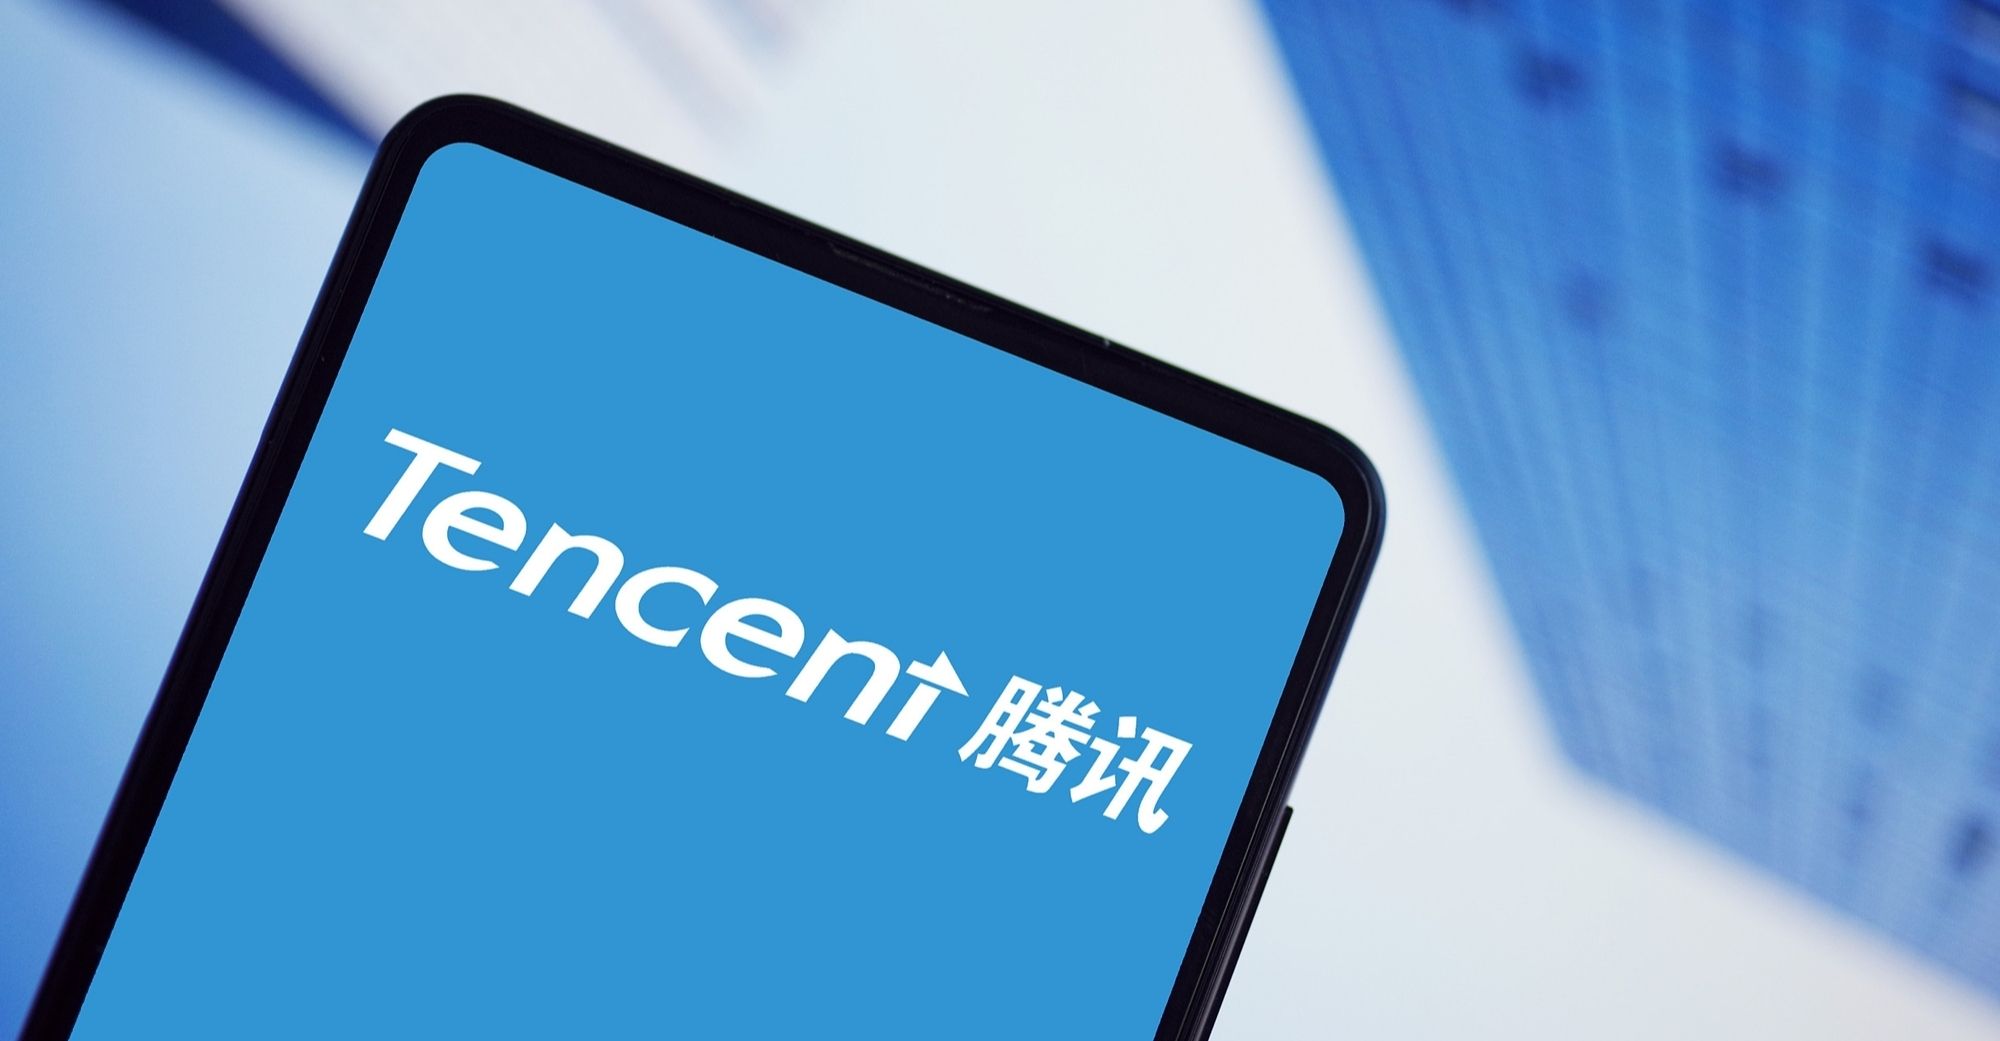 Tencent menuntut King of Glory Games kerana disyaki melanggar hak anak di bawah umur